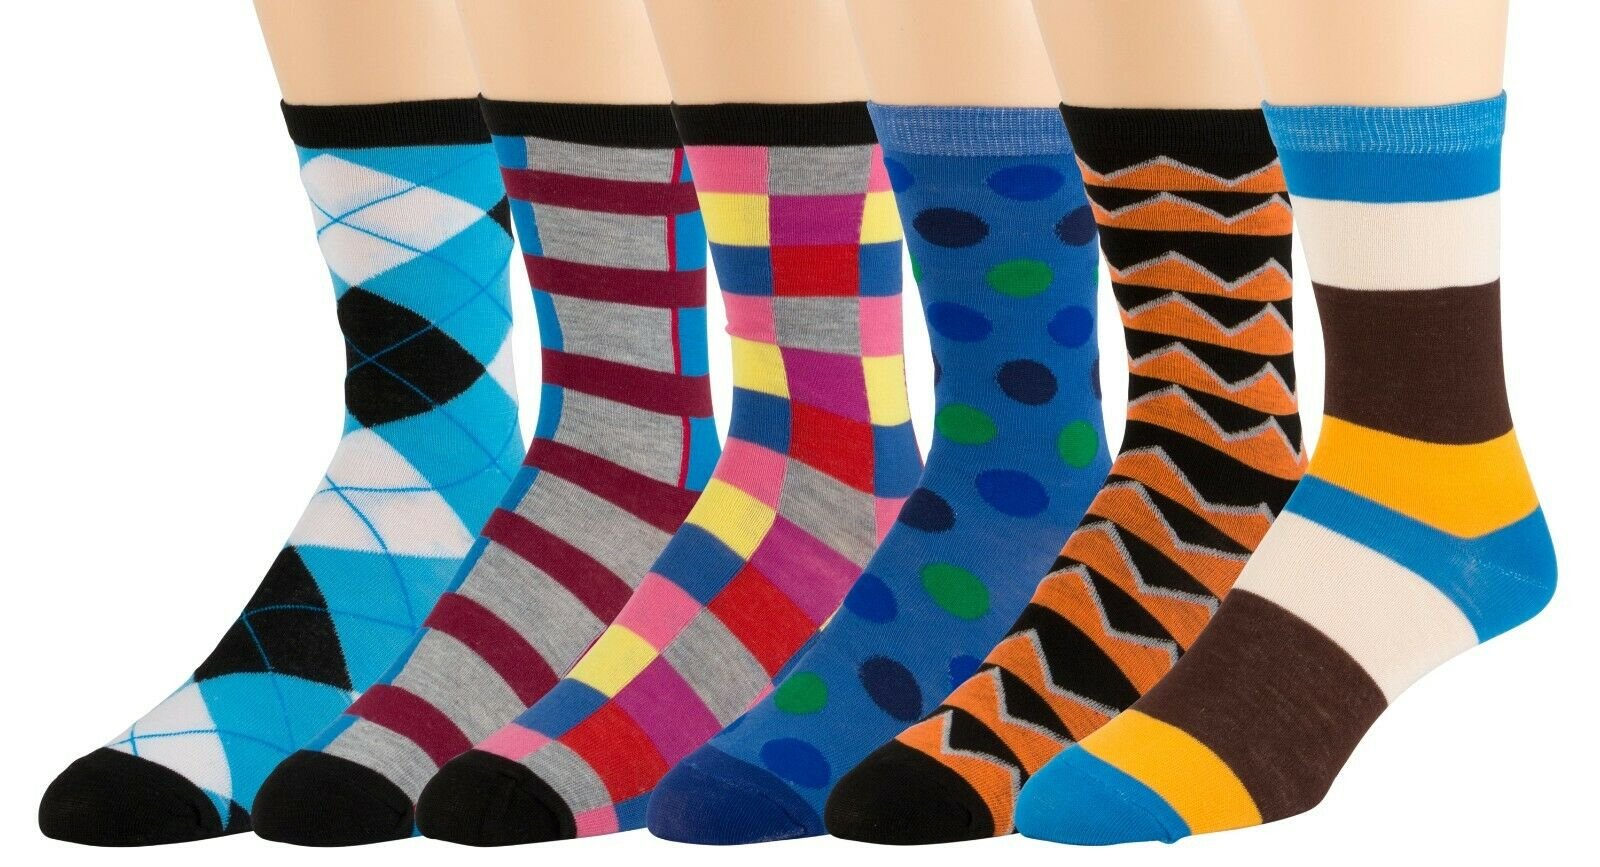 Men's Colorful Dress Socks 6 Pairs Fun Funky Dots Patterned Socks Size 10-13 